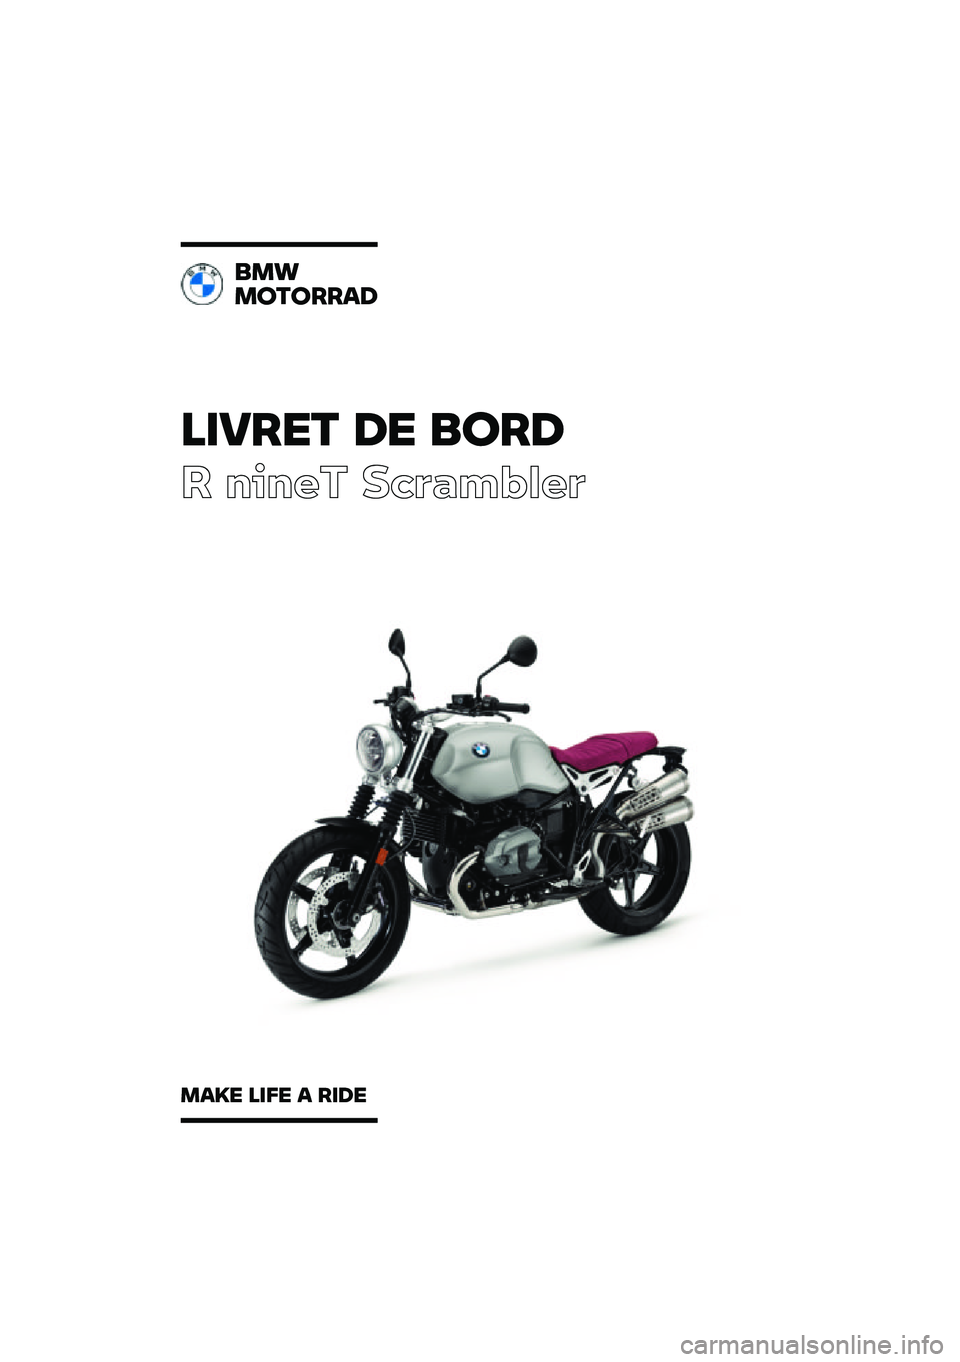 BMW MOTORRAD R NINE T SCRAMBLER 2021  Livret de bord (in French) ������ �\b� �	�
��\b
� ����� ��\b�	�
��\f�
��	
�	��\f
��
��
���
�\b
��
�� ���� �
 ���\b� 